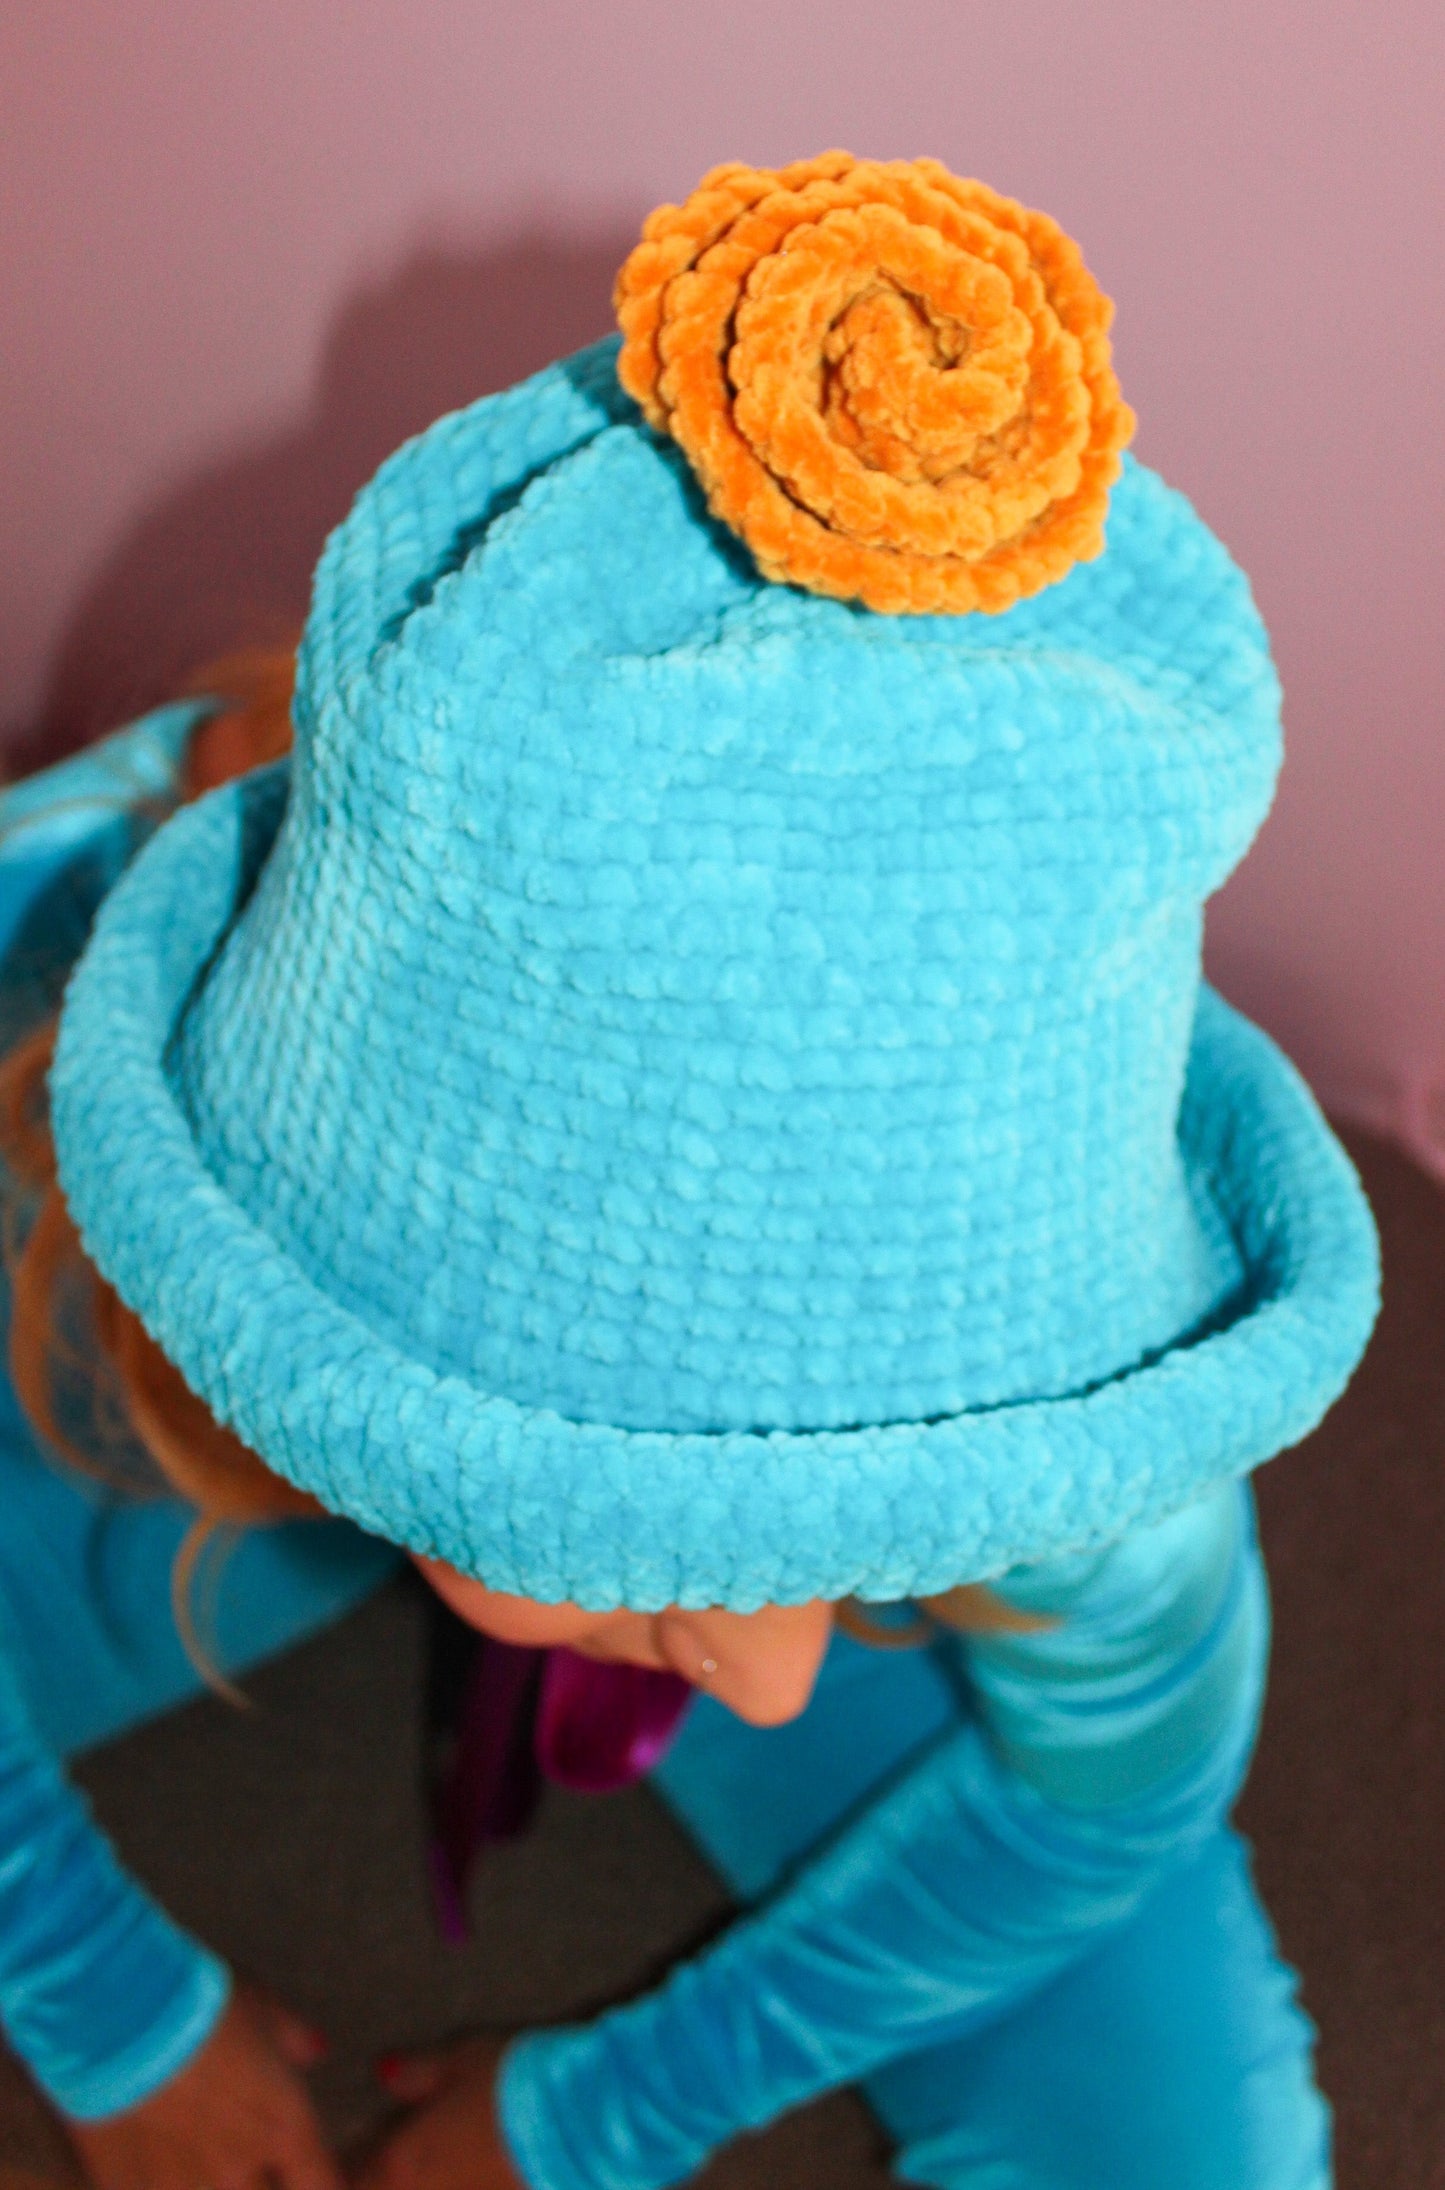 Berry Head Crochet Hat - Unika No. 2